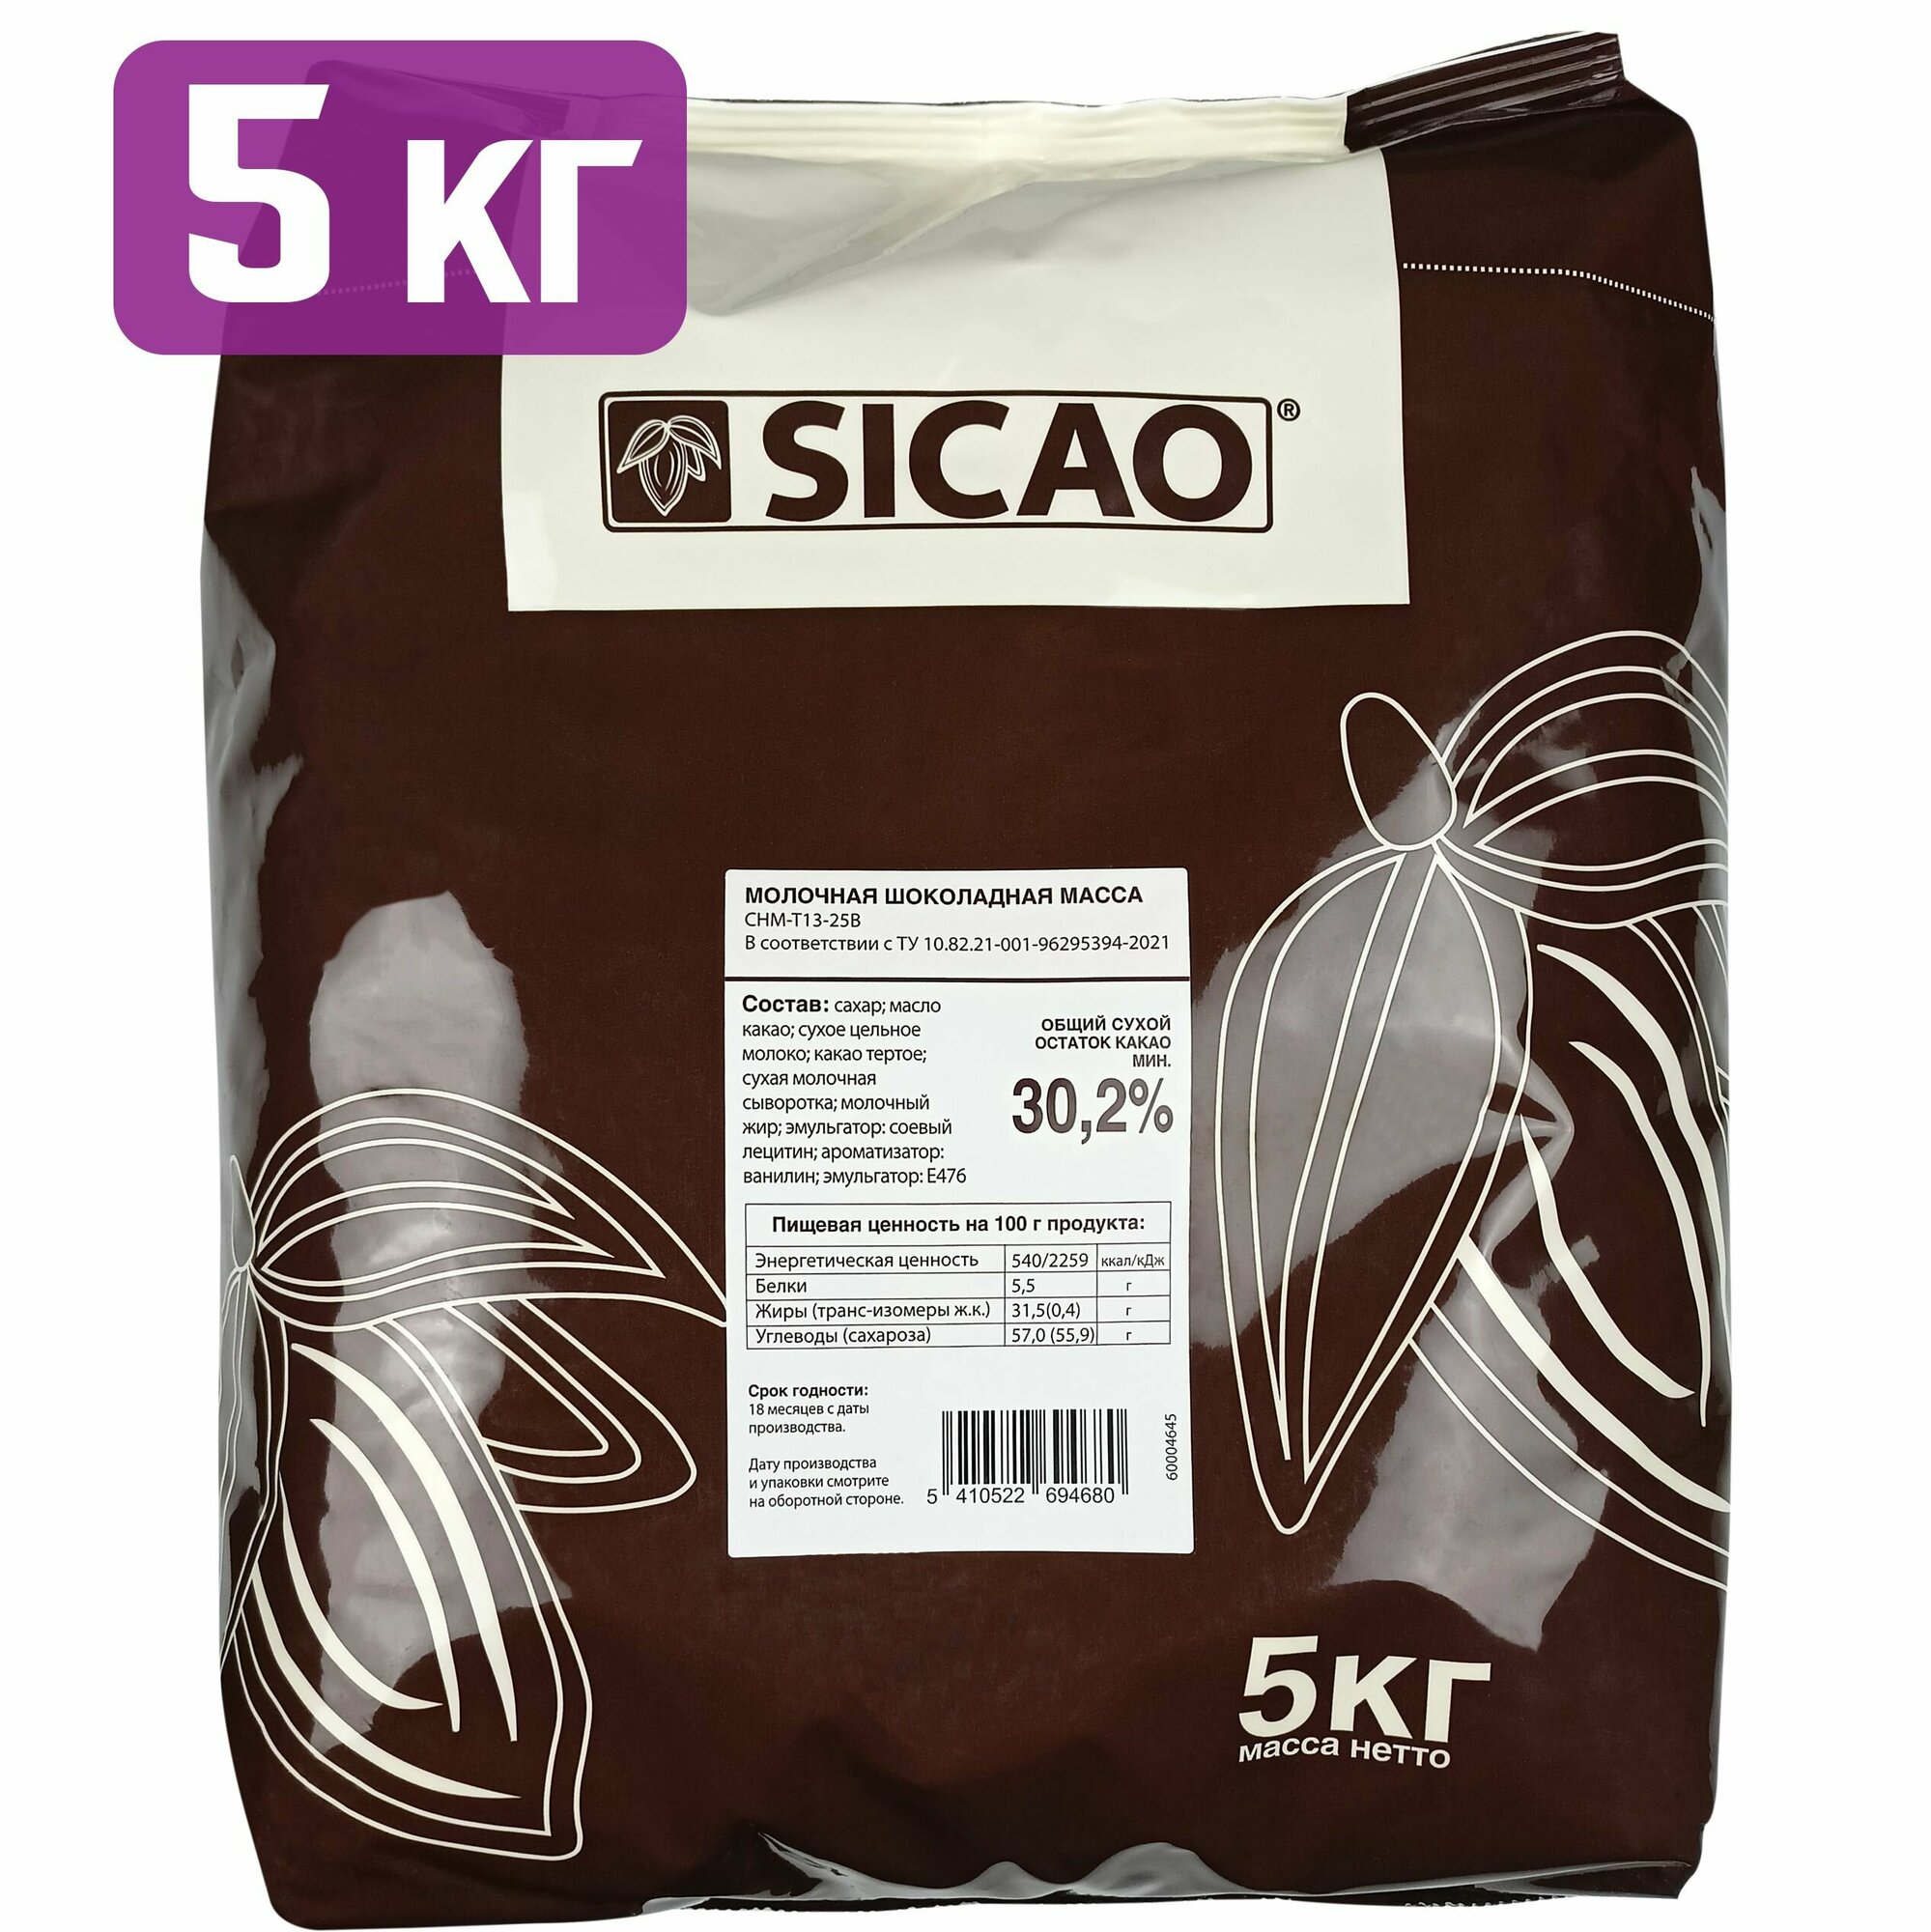 Sicao Молочный шоколад 30,2% , дропсы, каллеты, 5 кг, CHM-T13-25B